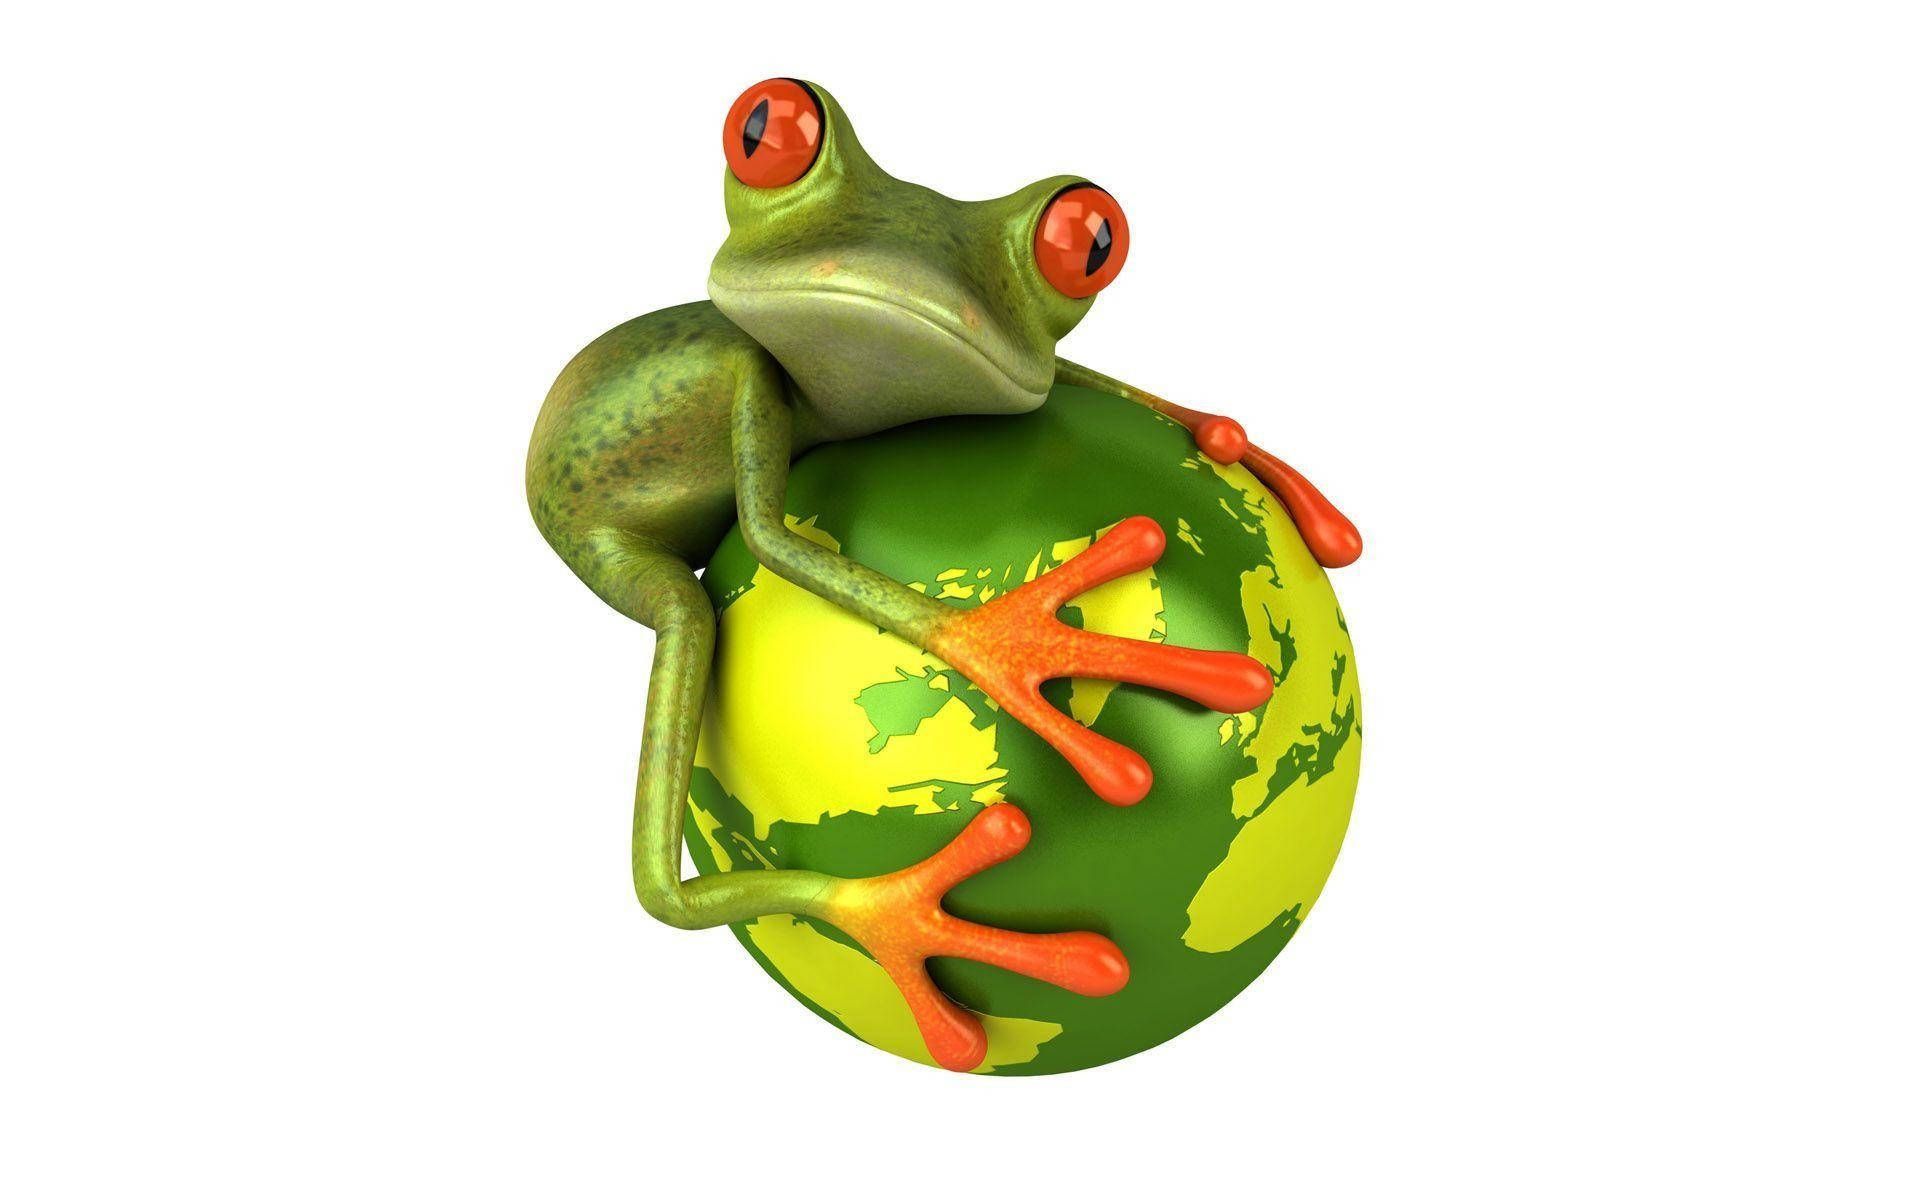 Free Kawaii Frog Wallpaper Downloads, Kawaii Frog Wallpaper for FREE